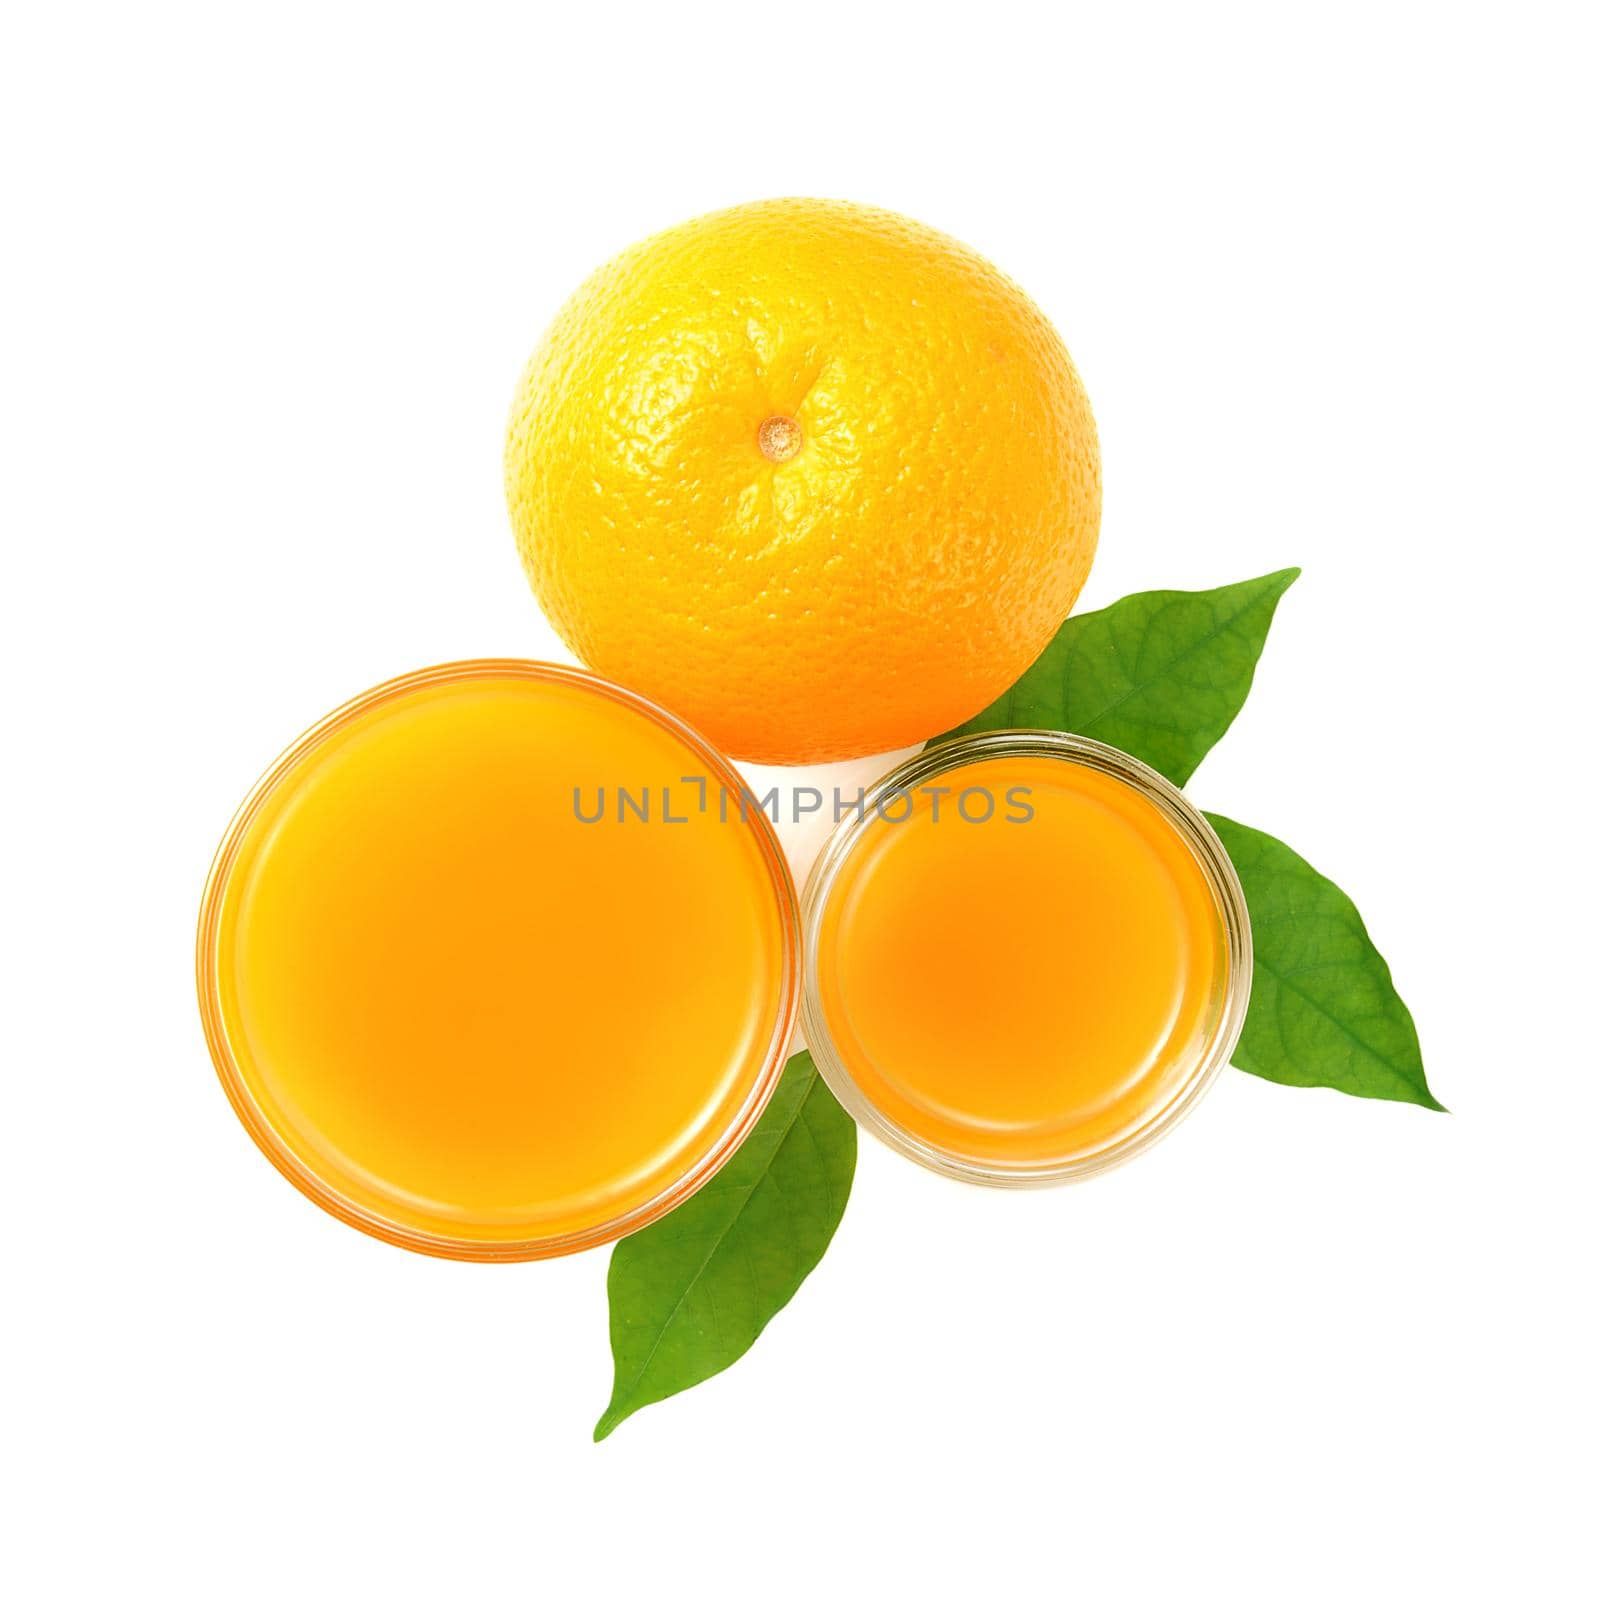 Ripe orange and cup of orange juice